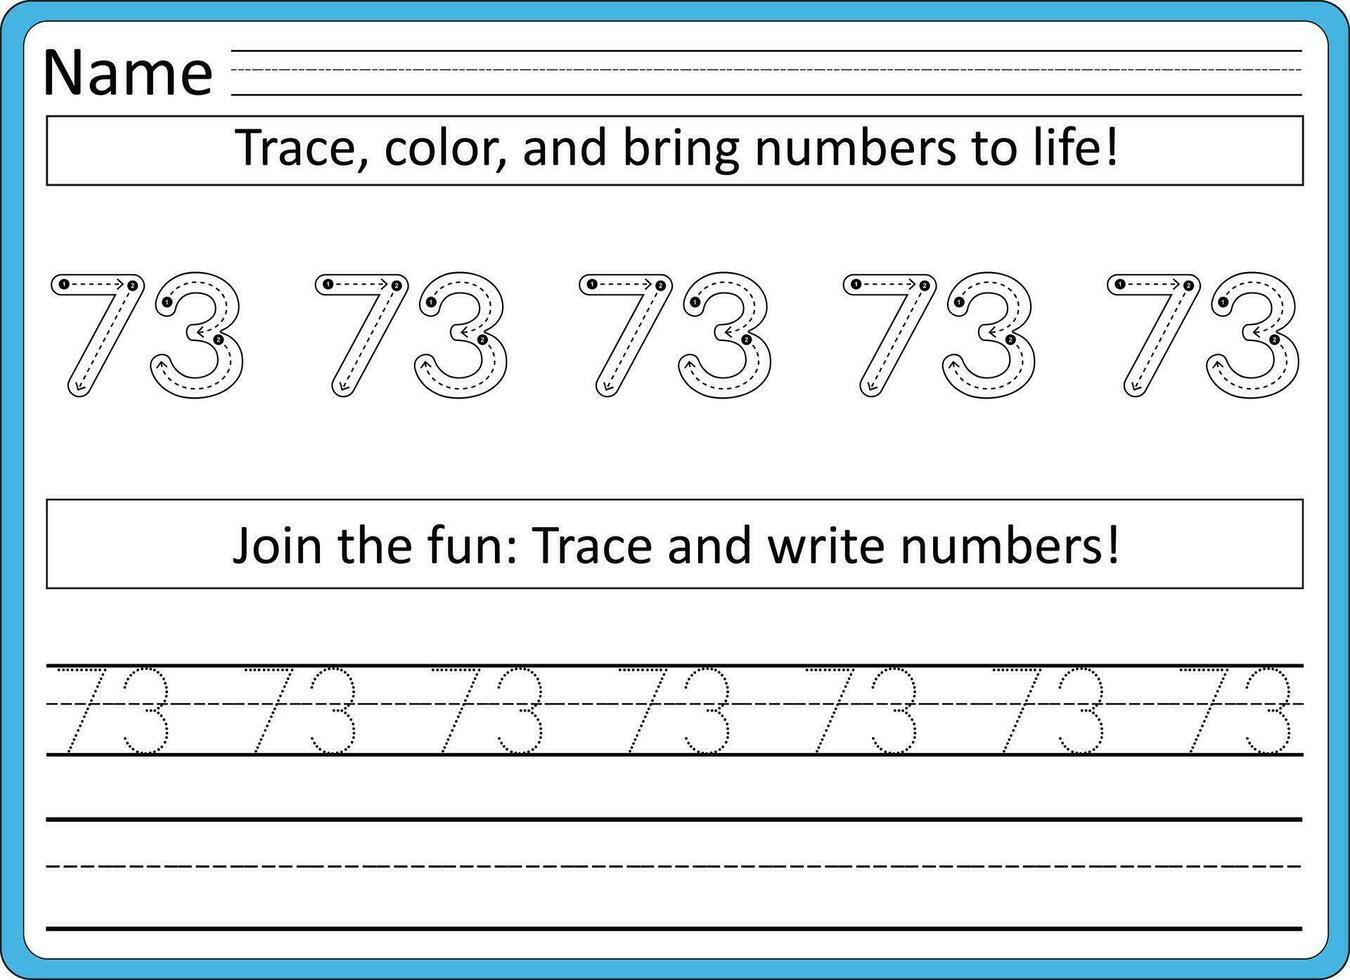 Rückverfolgung Arbeitsblätter zum Kinder Handschrift trainieren vektor